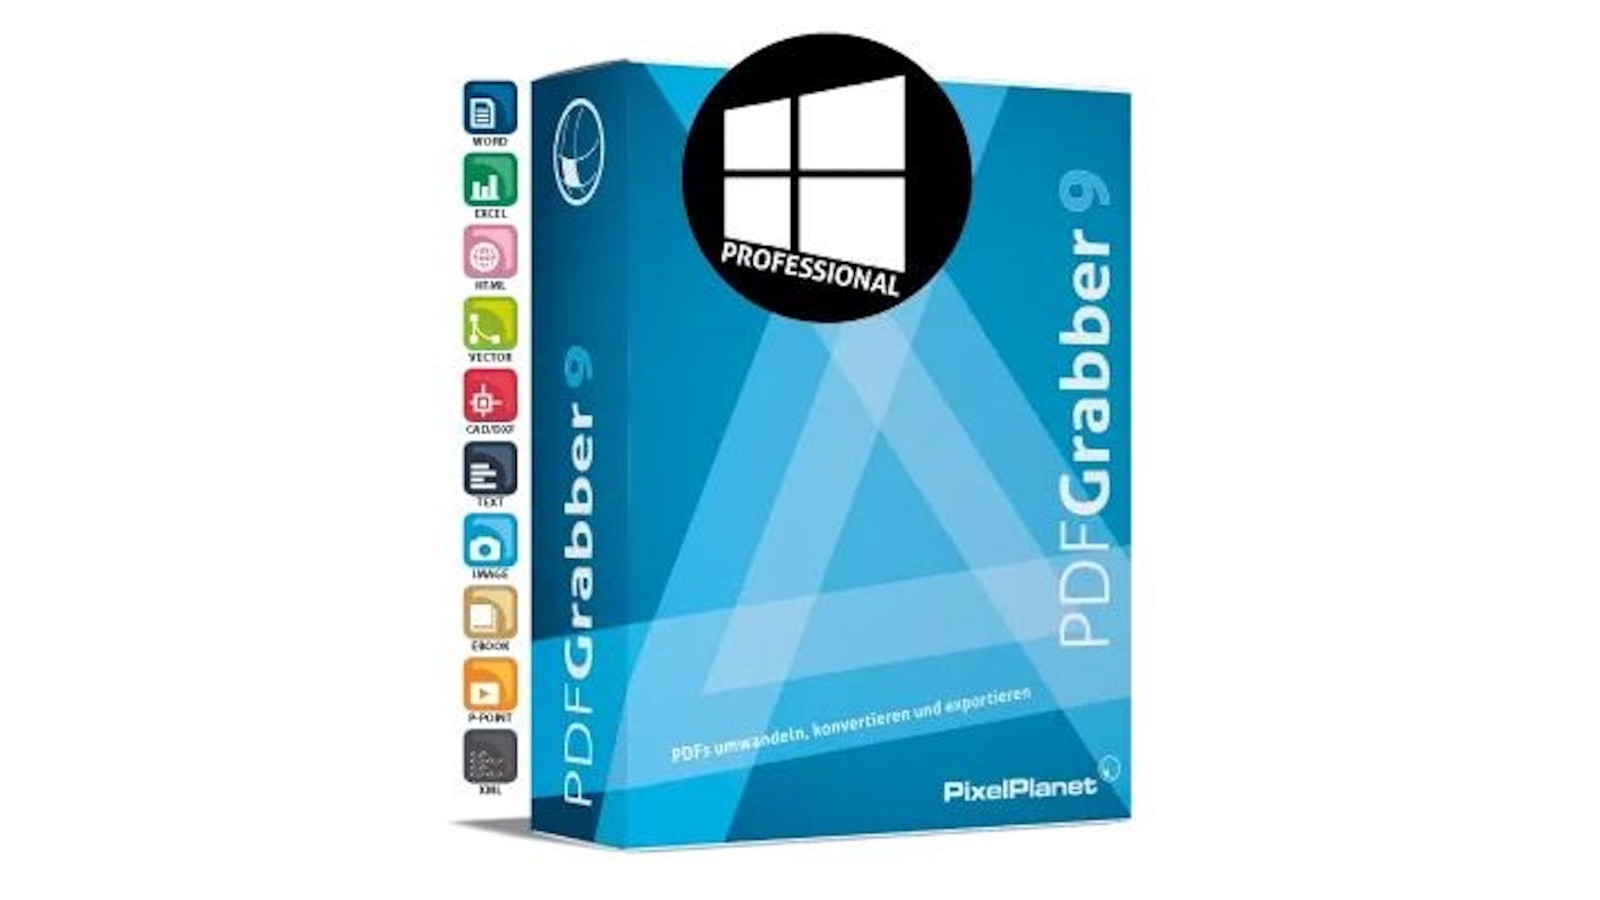 (7.74$) PixelPlanet PdfGrabber 9 Professional Network Licence Key (Lifetime / 5 Users)